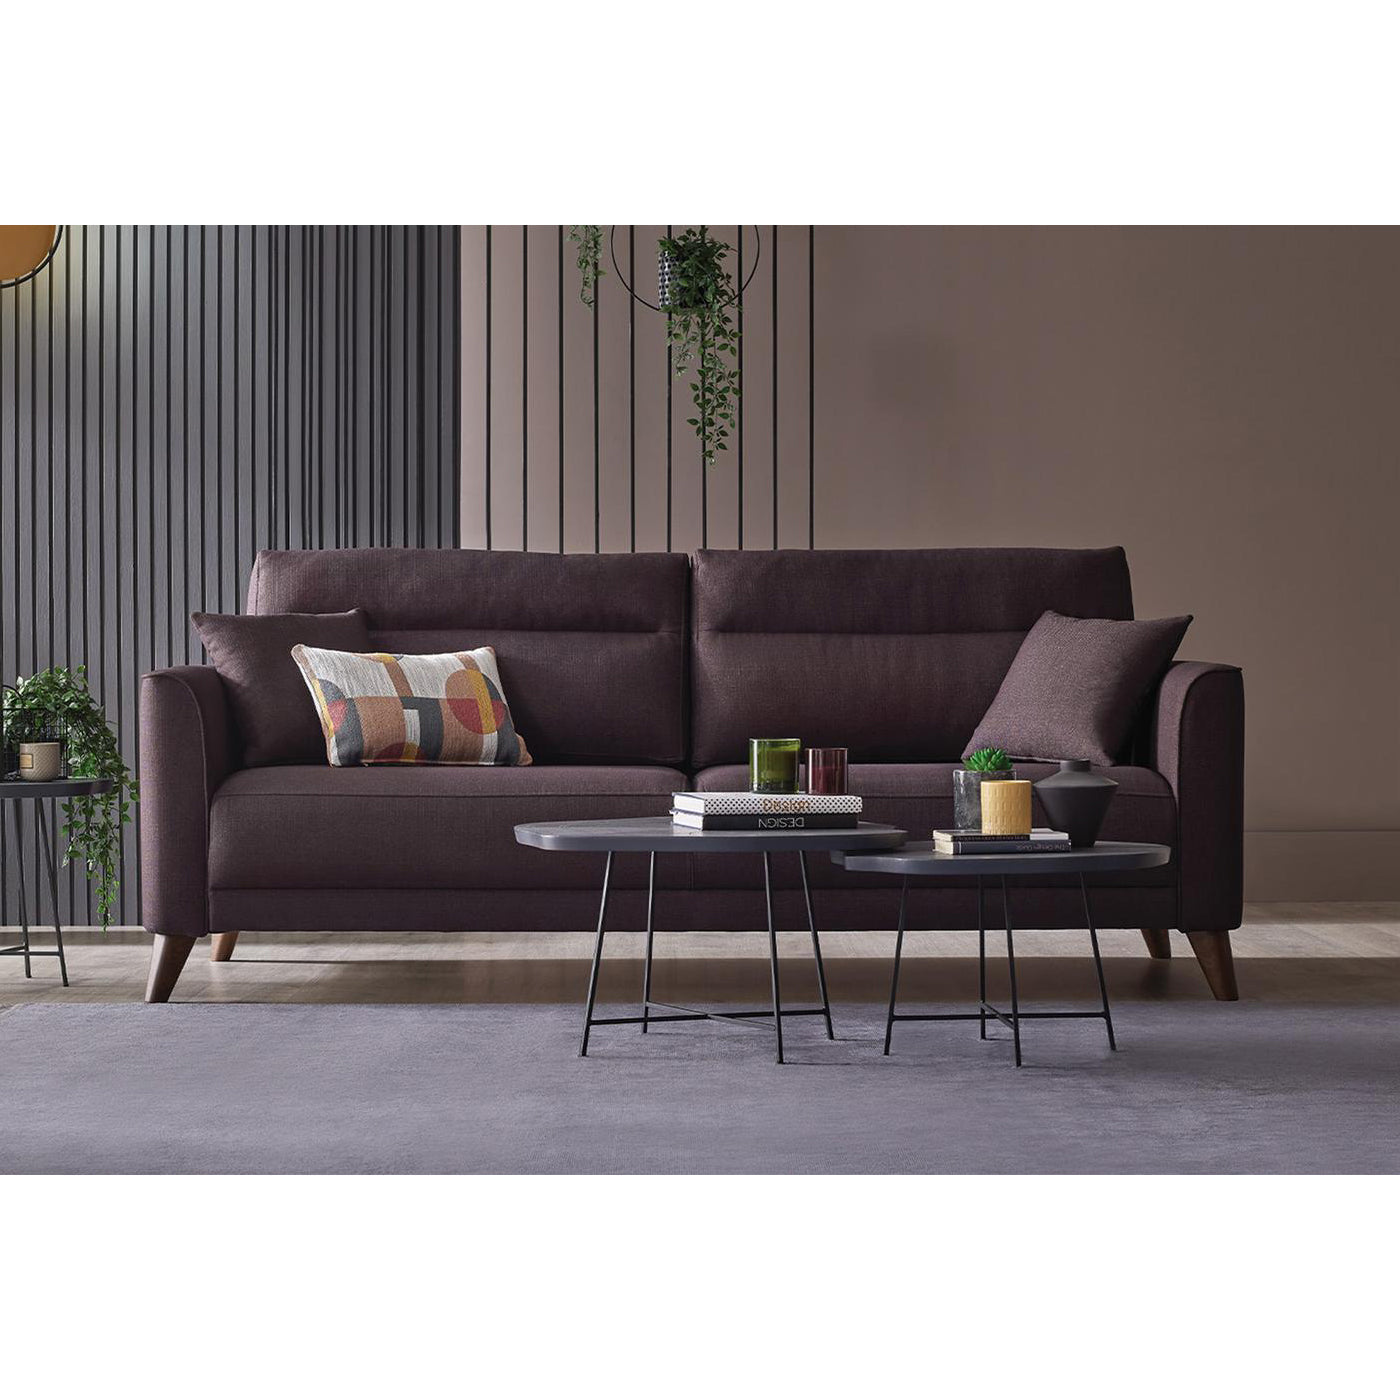 Alto Brown 3-Seater Sofa Bed with Storage - ALTO 03.302.0514.0937.0048.0000.21.17